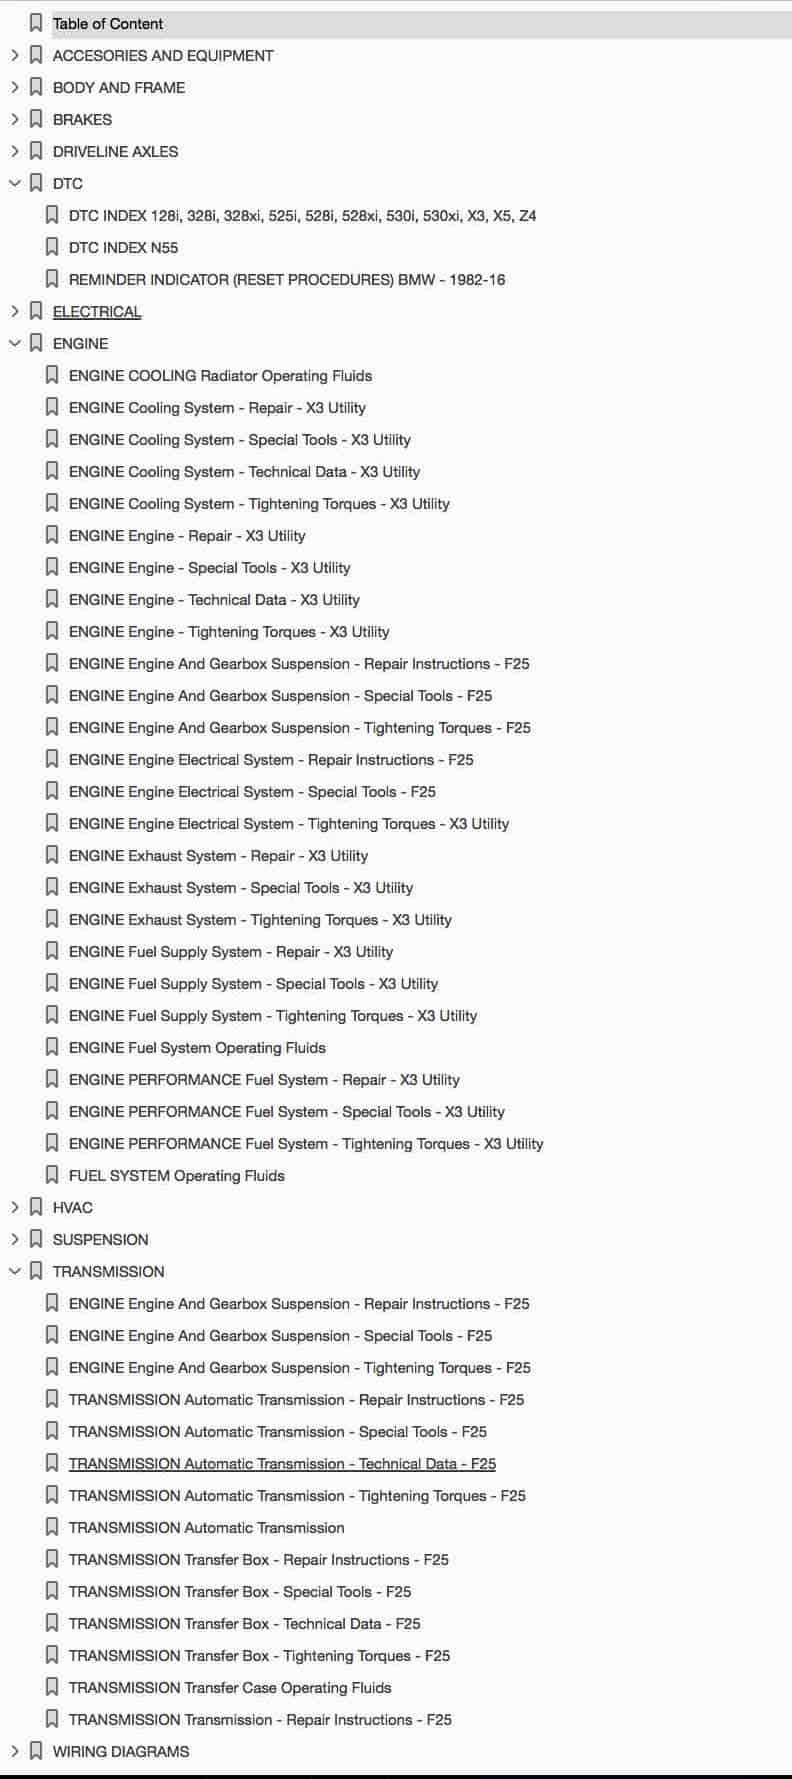 Table of Contents 2010-2017 BMW X3 Series Repair Manual